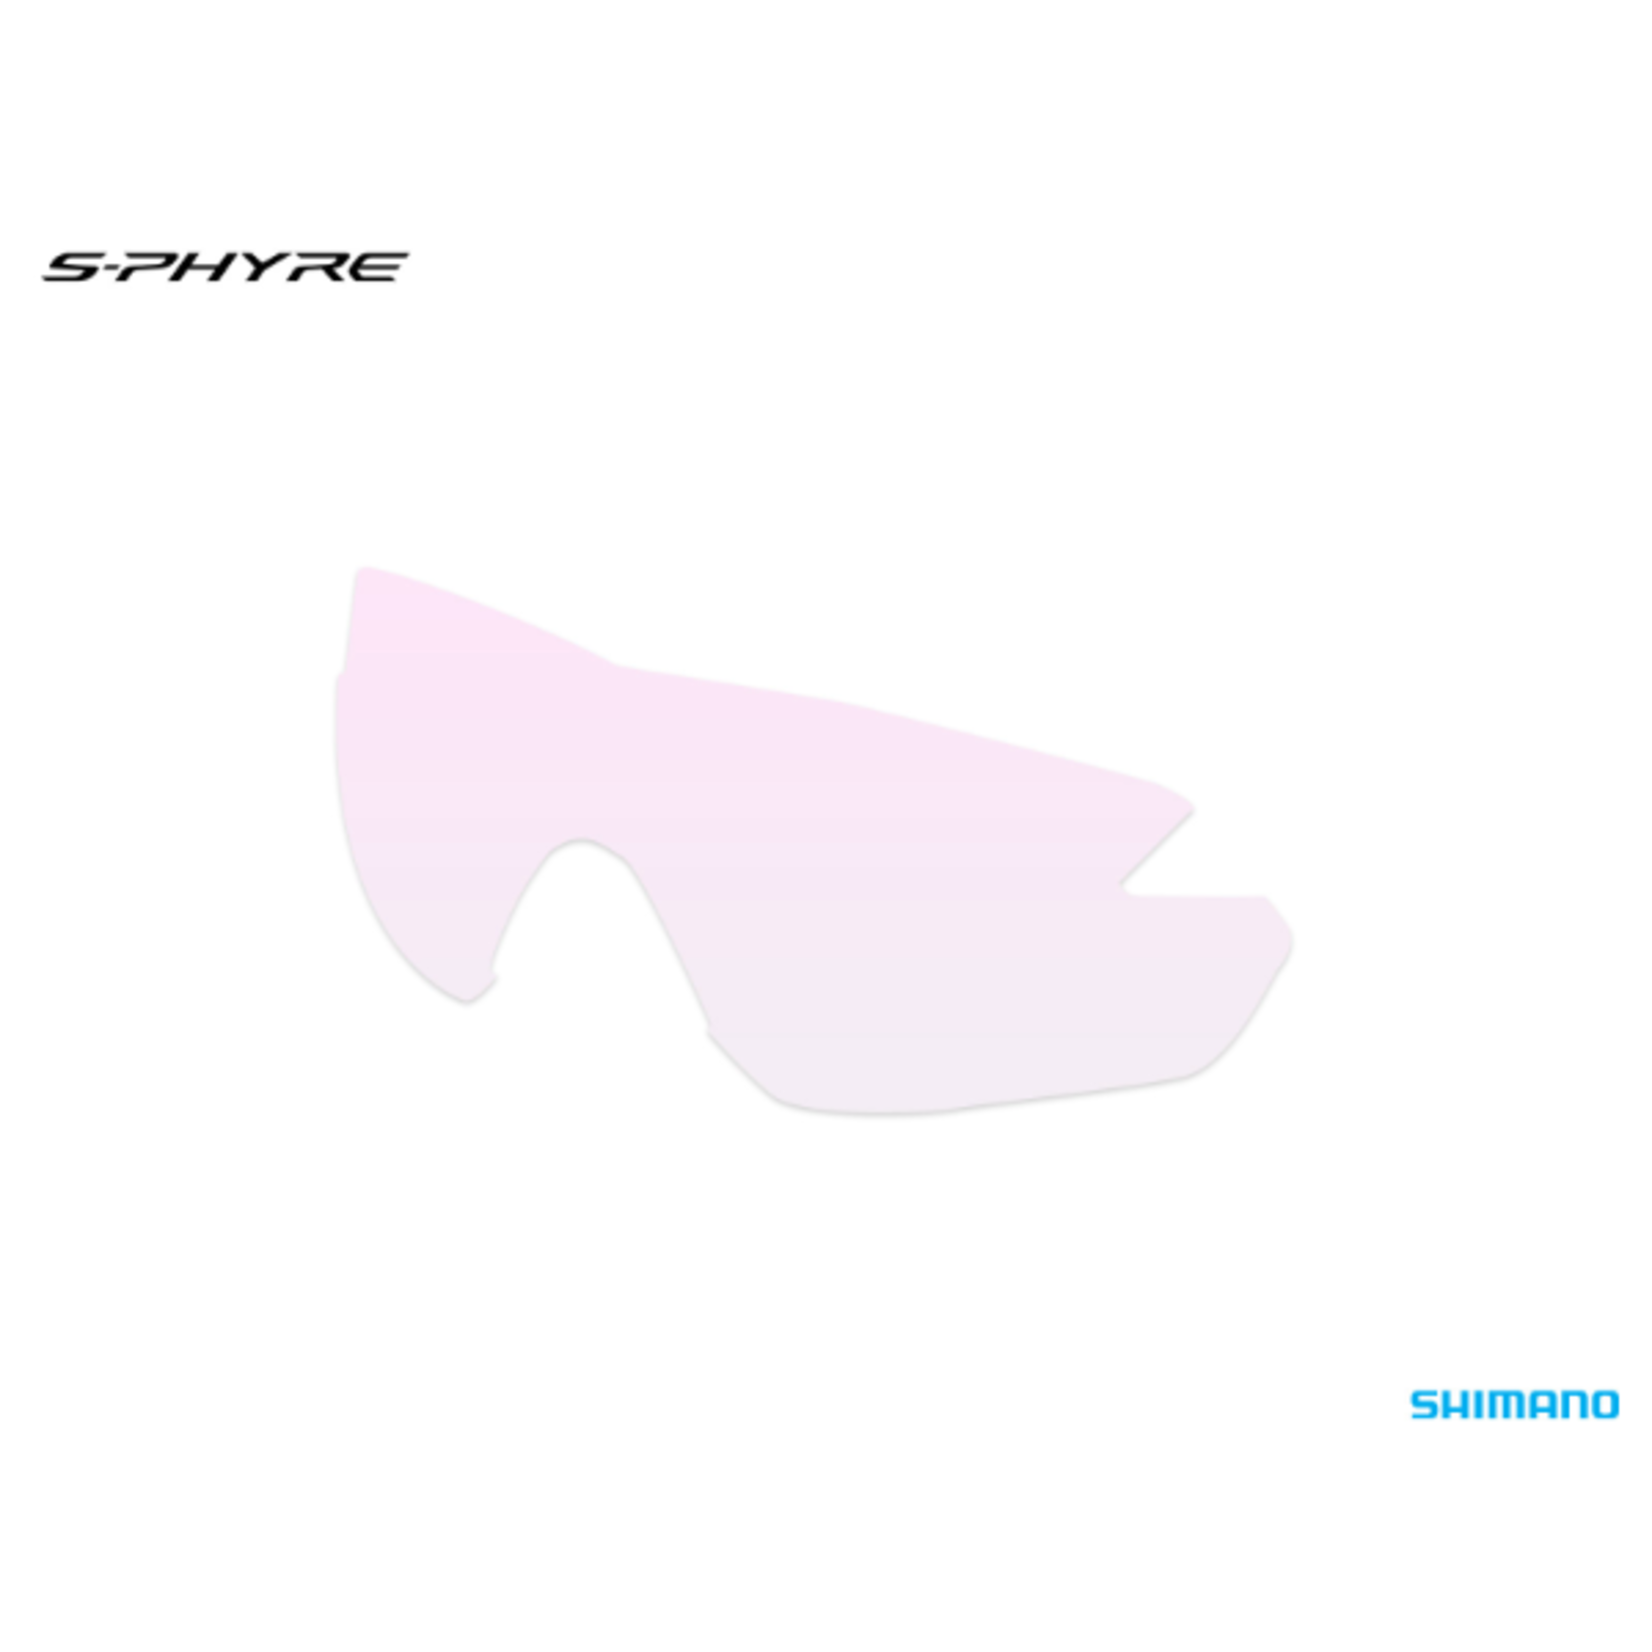 Shimano Shimano Eyewear Bike Goggles Spare Lens - S-Phyre X Sphx1 - Cloud Mirror